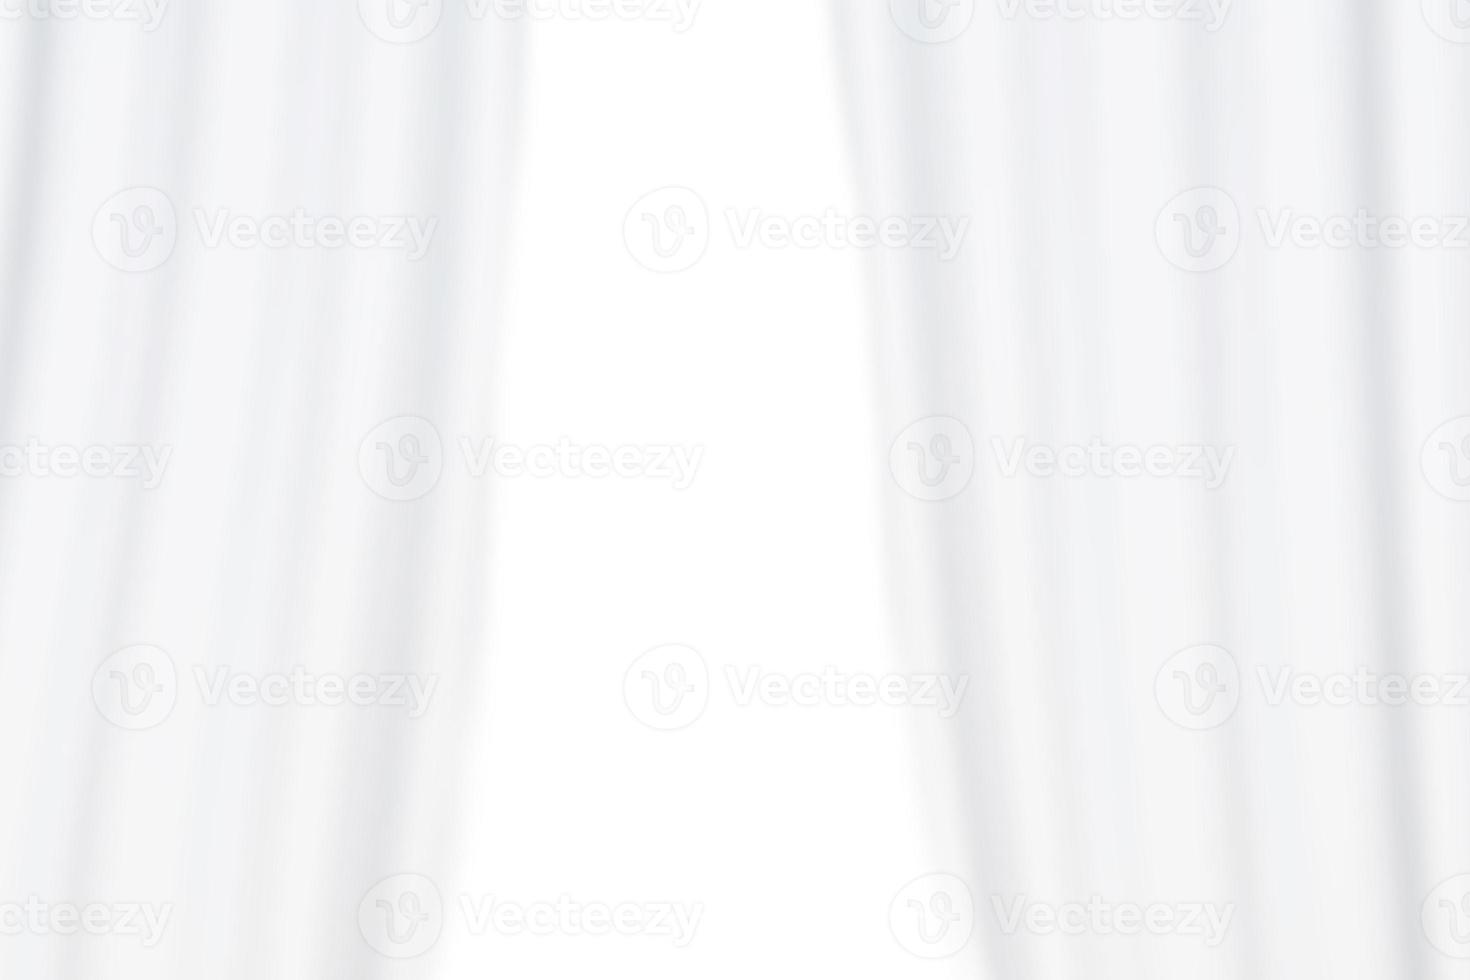 Desenfoque abstracto cortinas blancas aislado sobre fondo blanco. 12592431  Foto de stock en Vecteezy